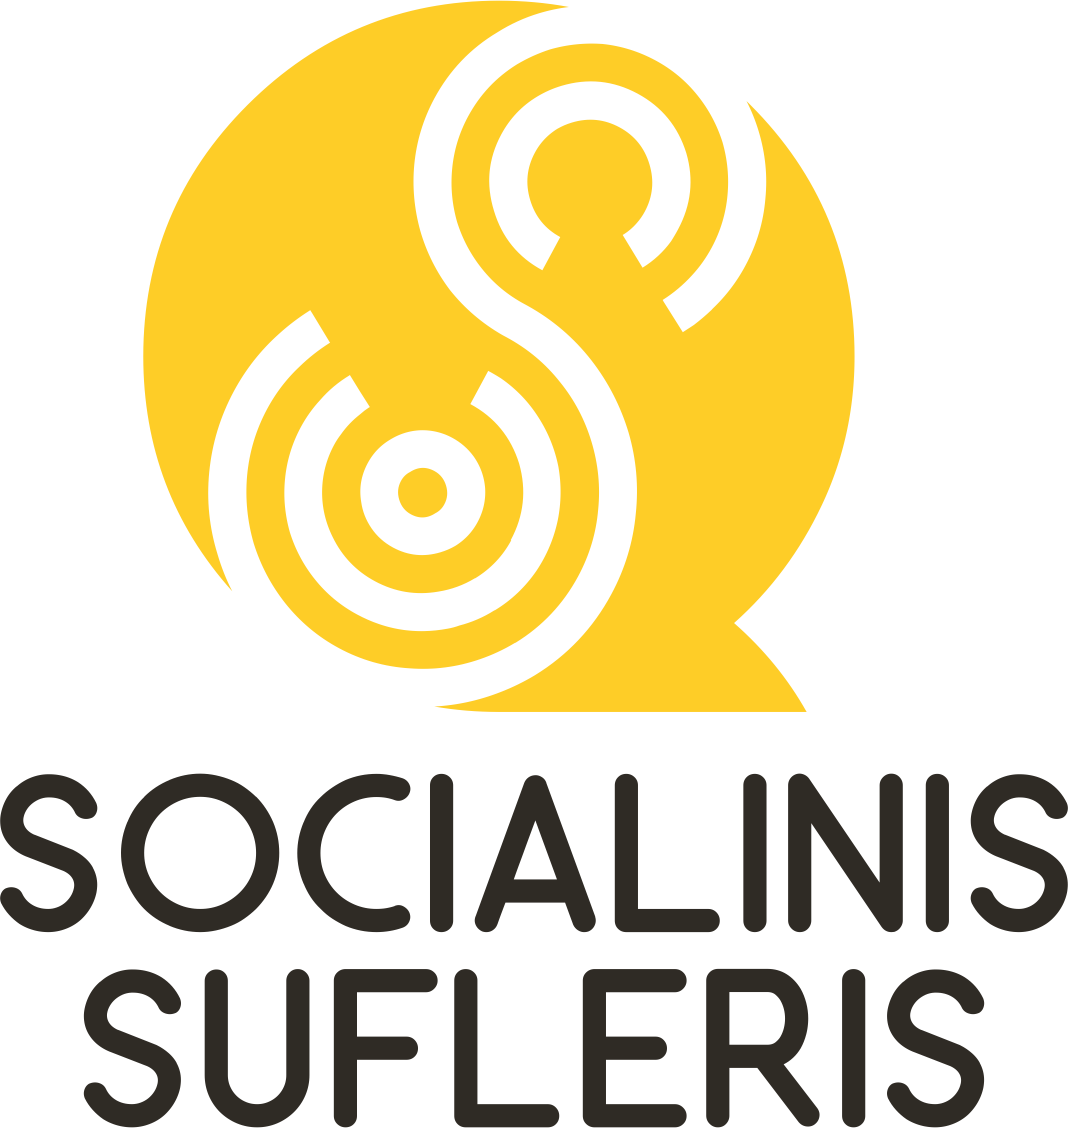 socialinis-sufleris-logo